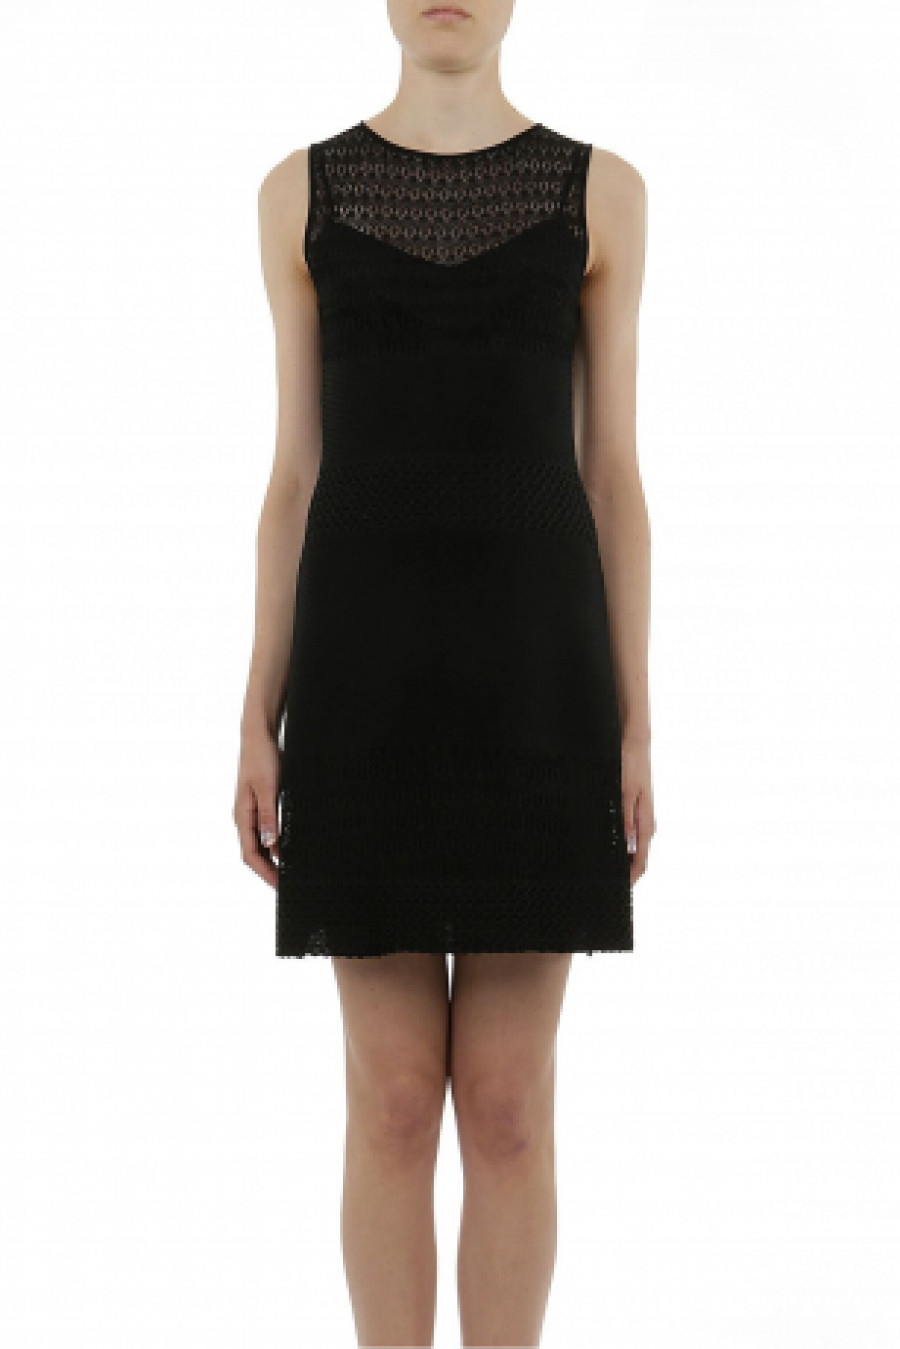 Boutique Moschino Women's dress stretch viscose black minidress